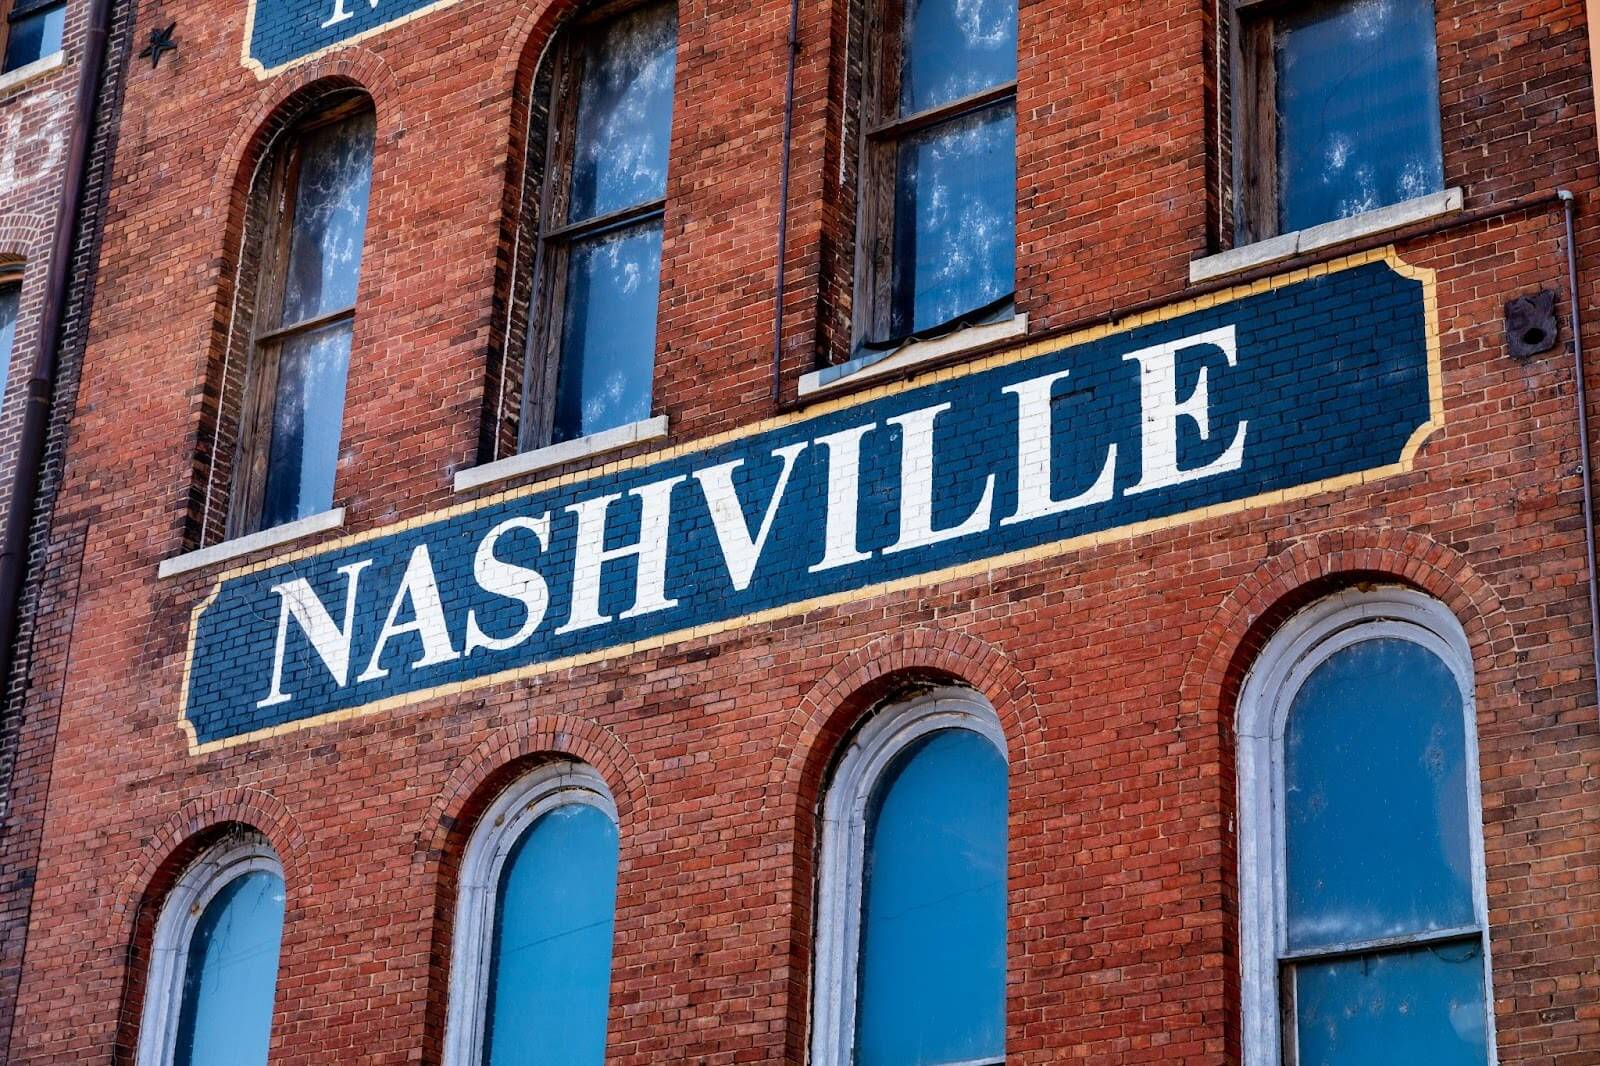 Historic building in Nashville.